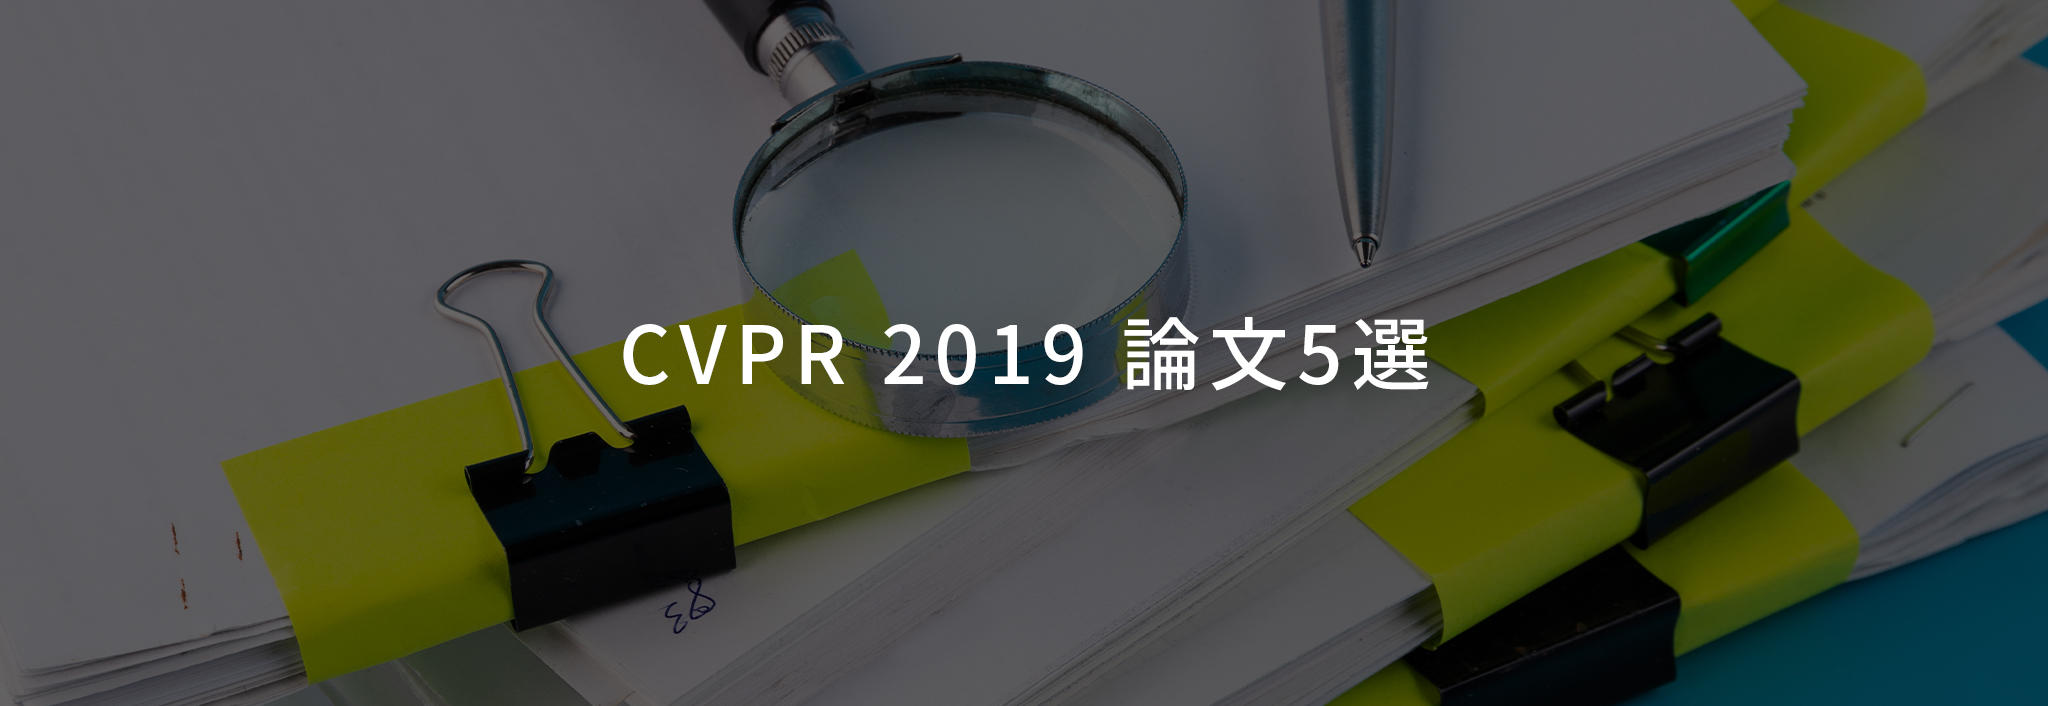 CVPR 2019 論文5選